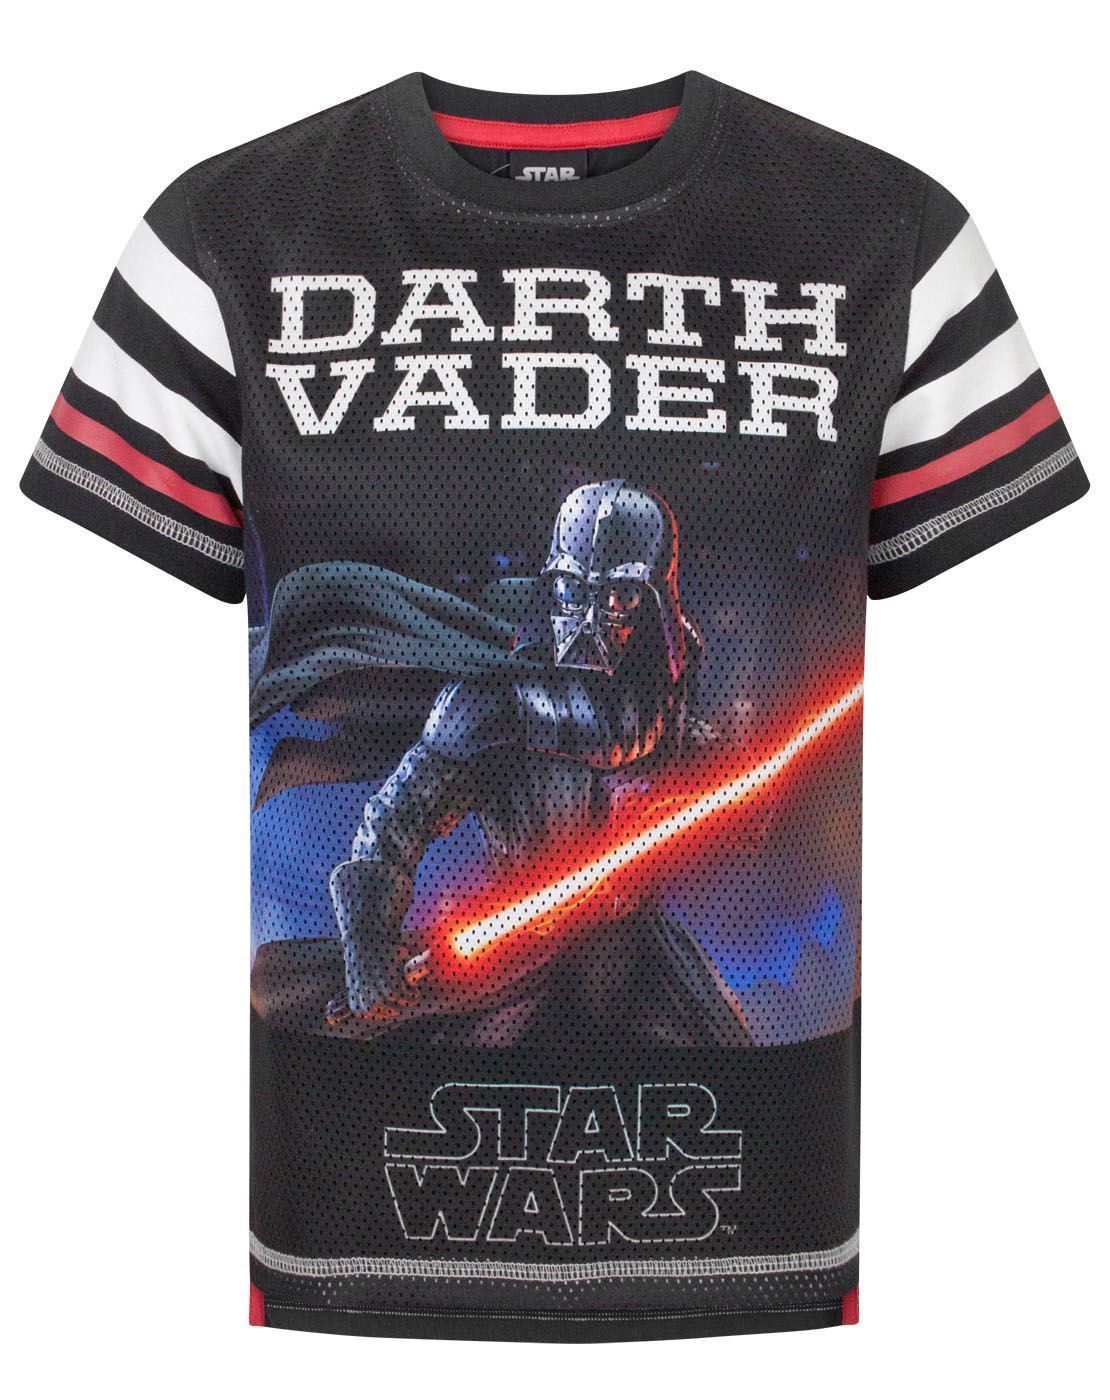 star wars darth vader t shirt